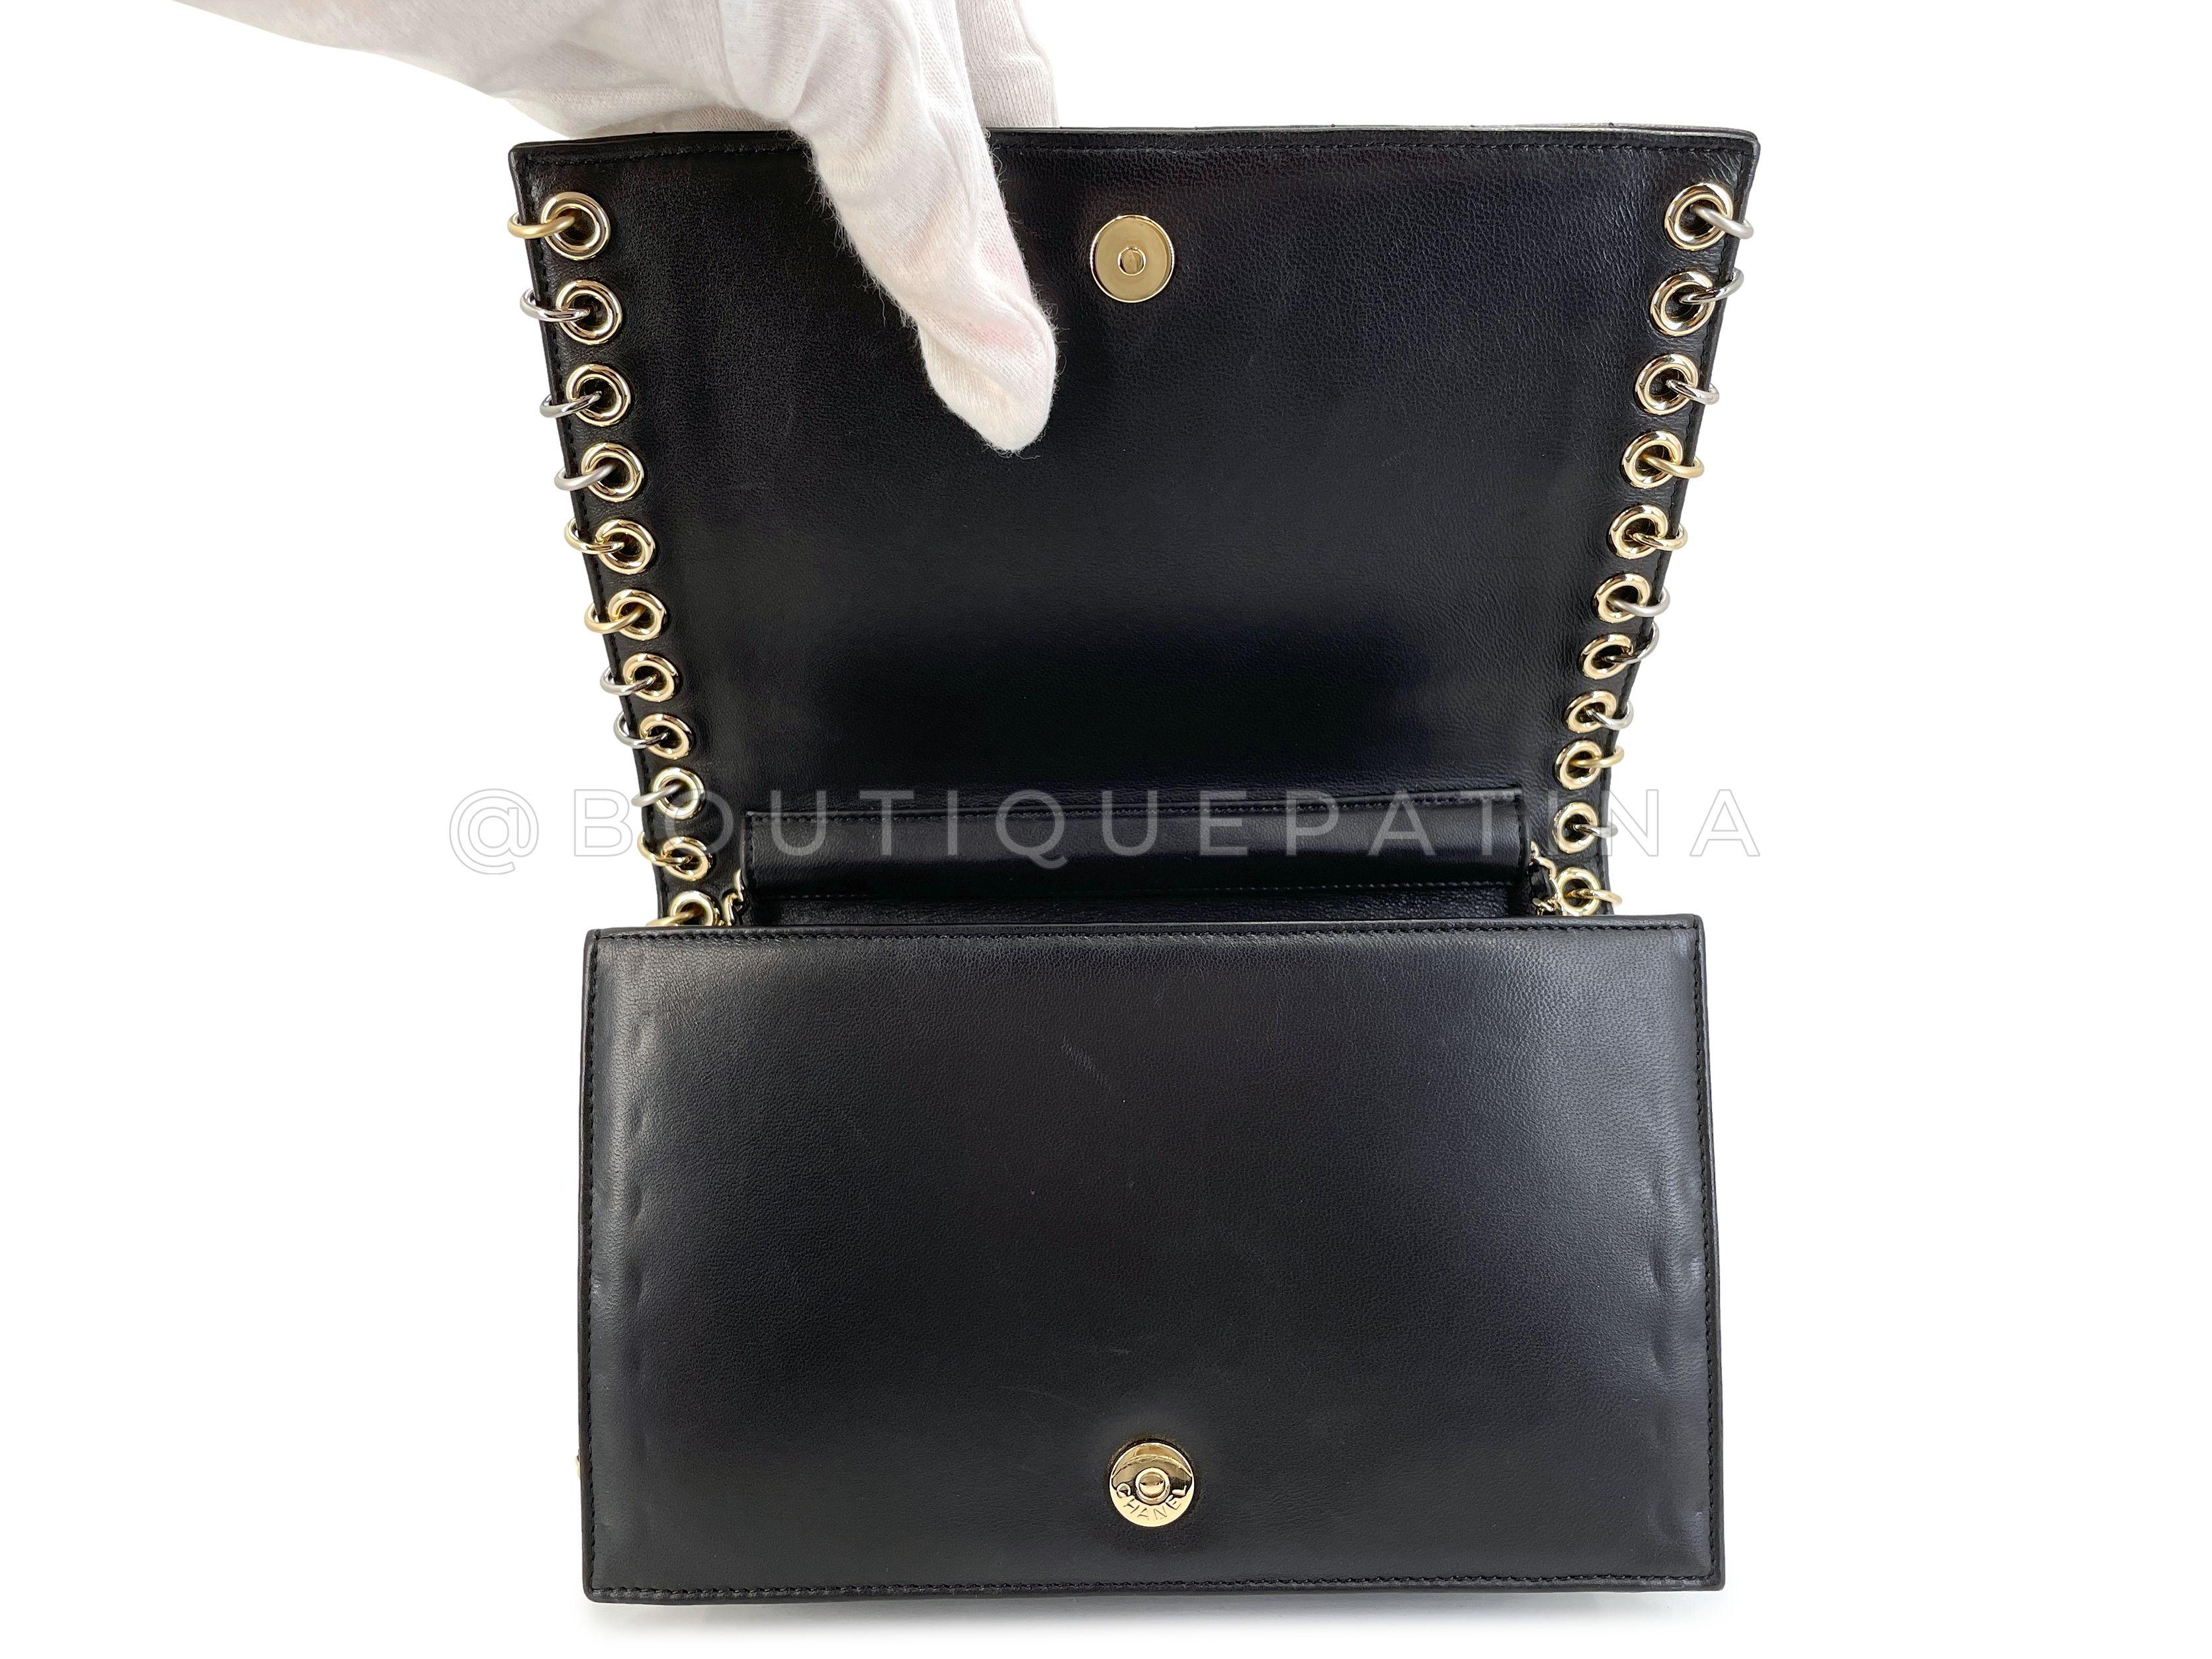 Pristine Chanel 16B Punk CC-Studded Piercing Clutch on Chain Bag Black 67544 For Sale 5